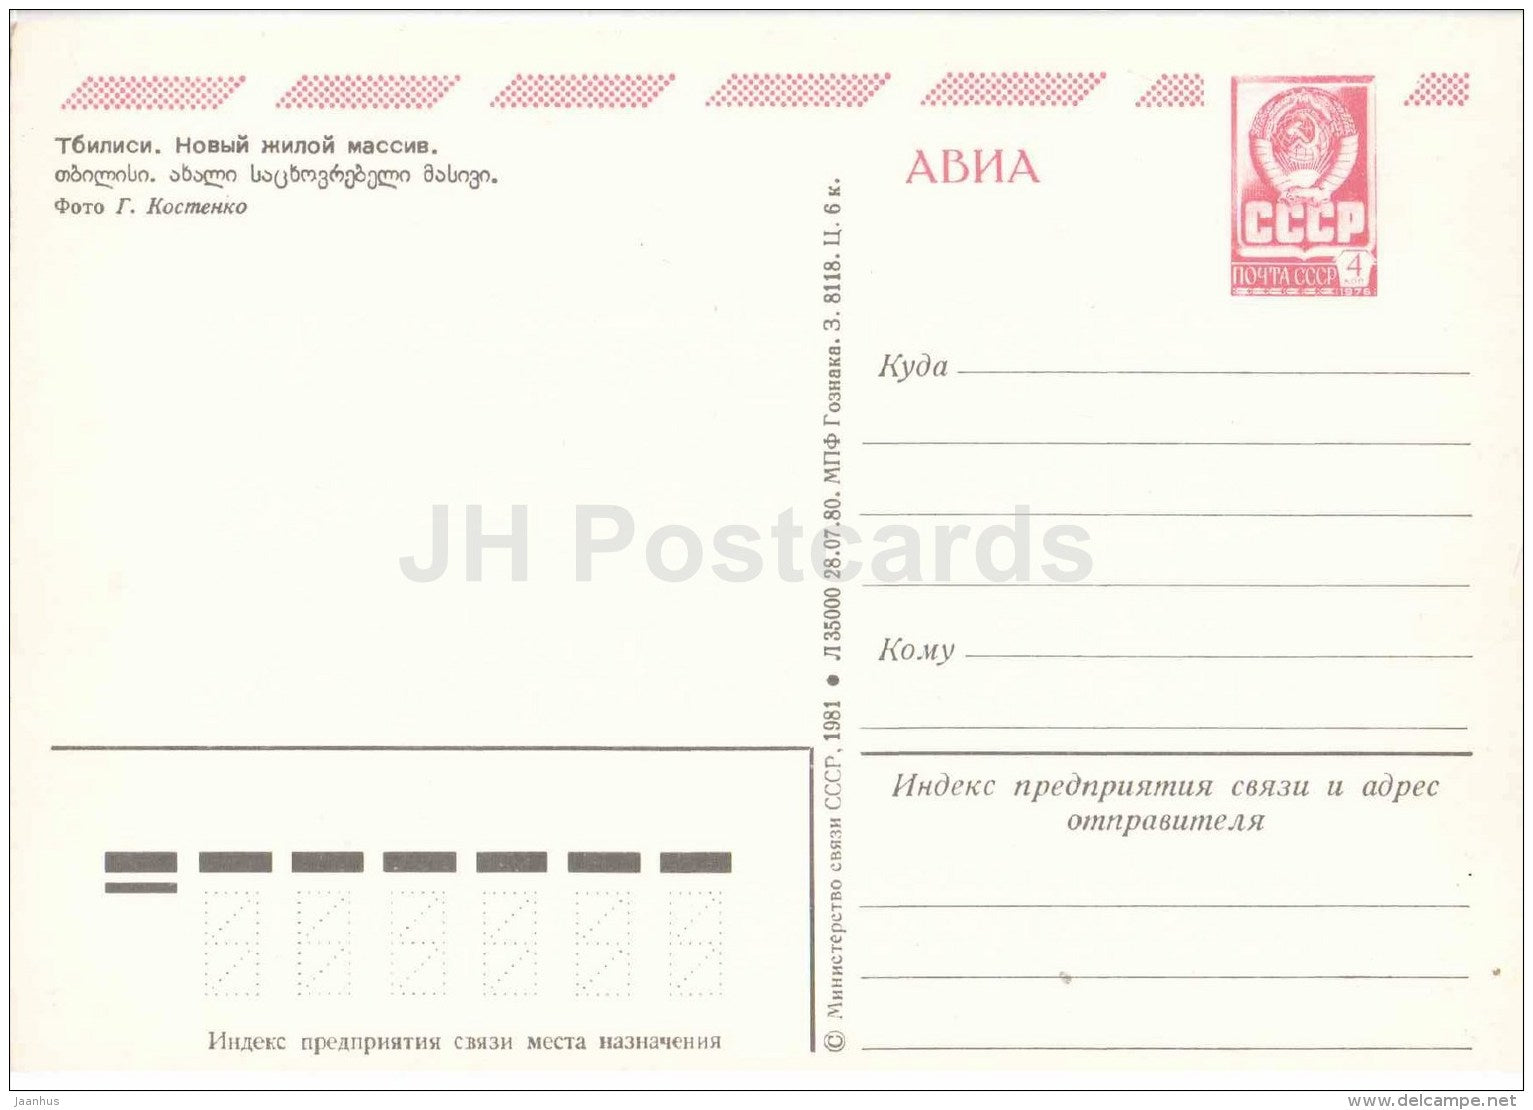 new residential area - Tbilisi - postal stationery - AVIA - 1981 - Georgia USSR - unused - JH Postcards